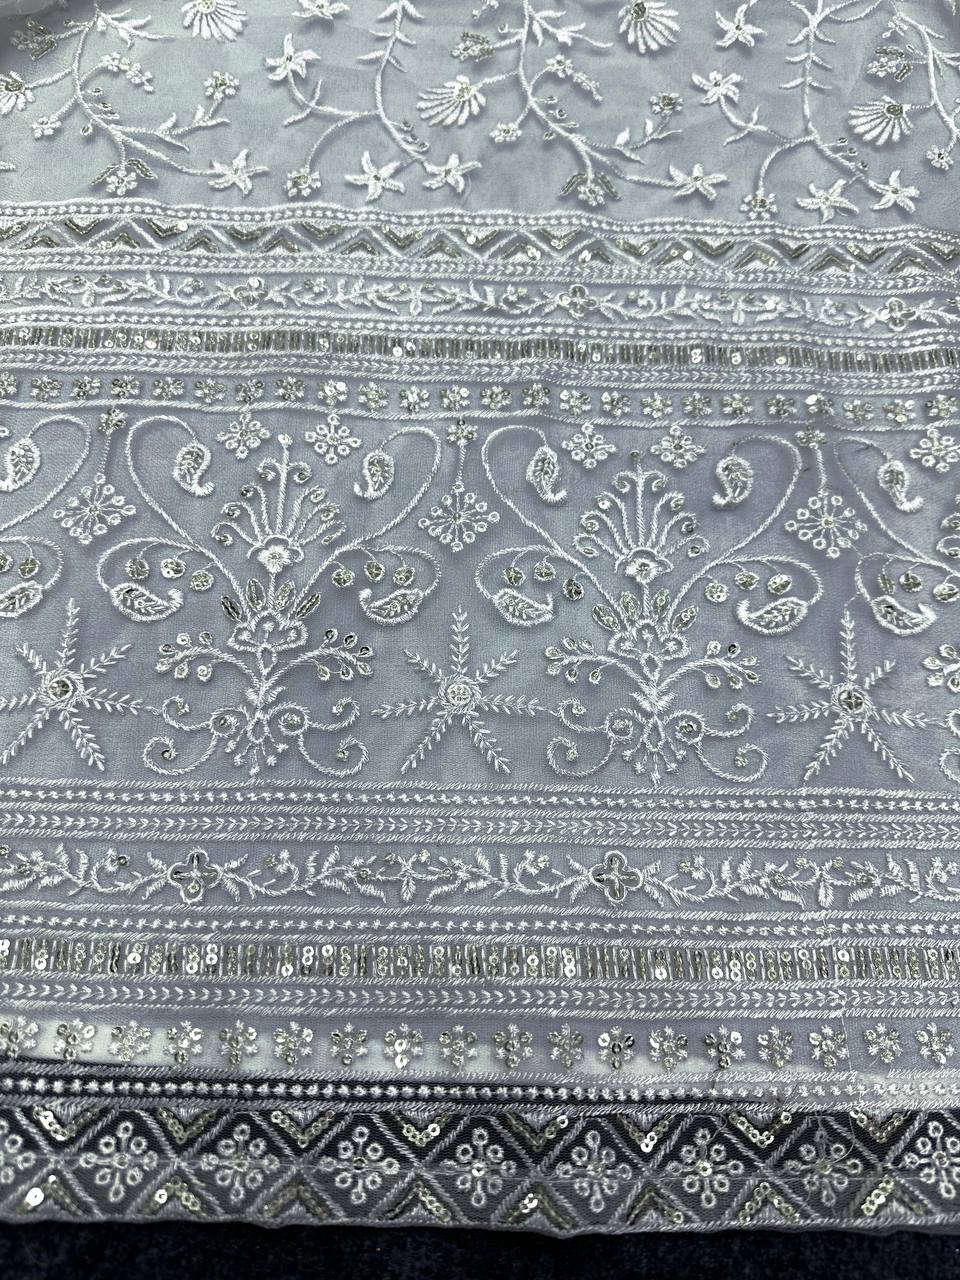 Wedding Wear Soft Net Embroidered Lehenga Choli